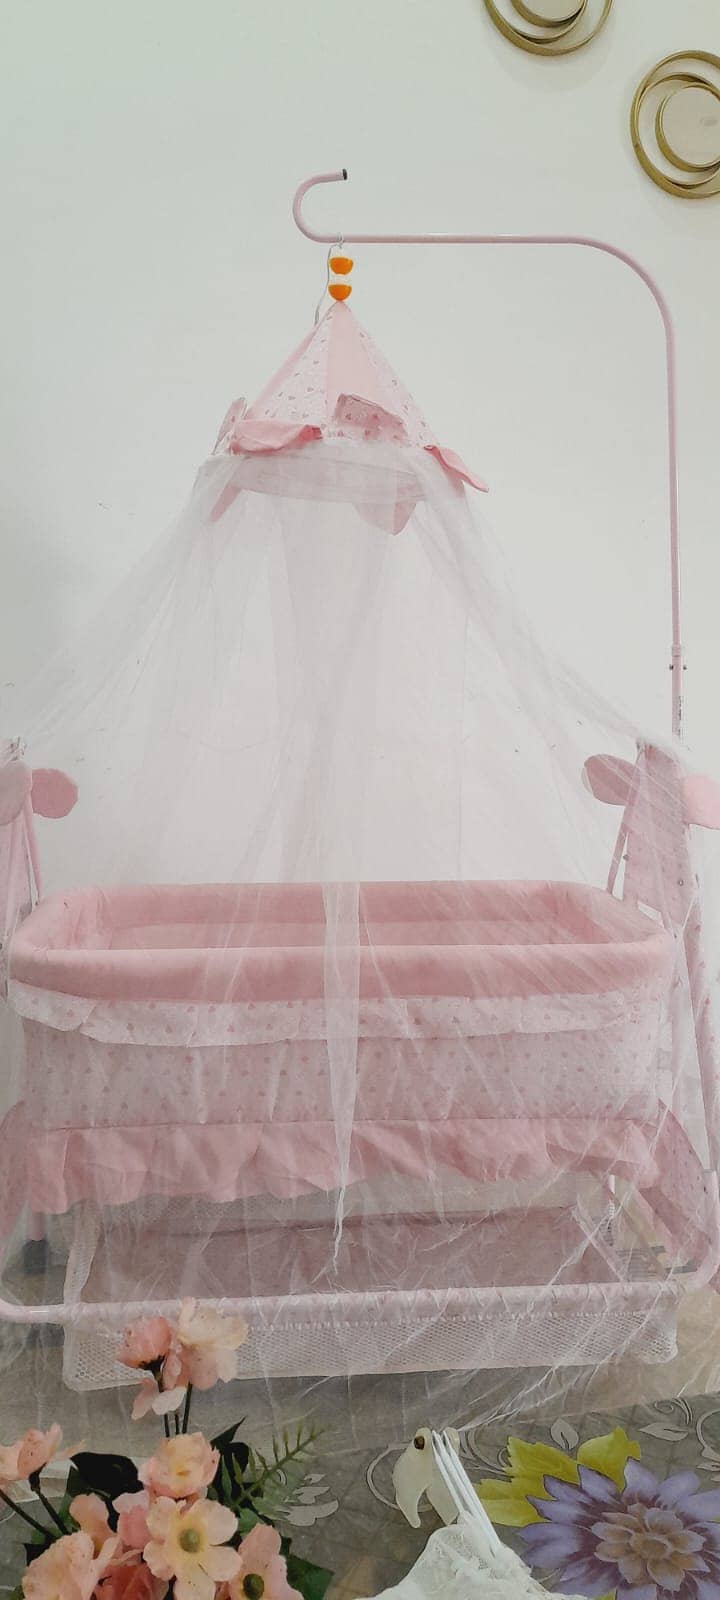 Baby cot / Baby beds / Kid baby cot / Kids furniture 5